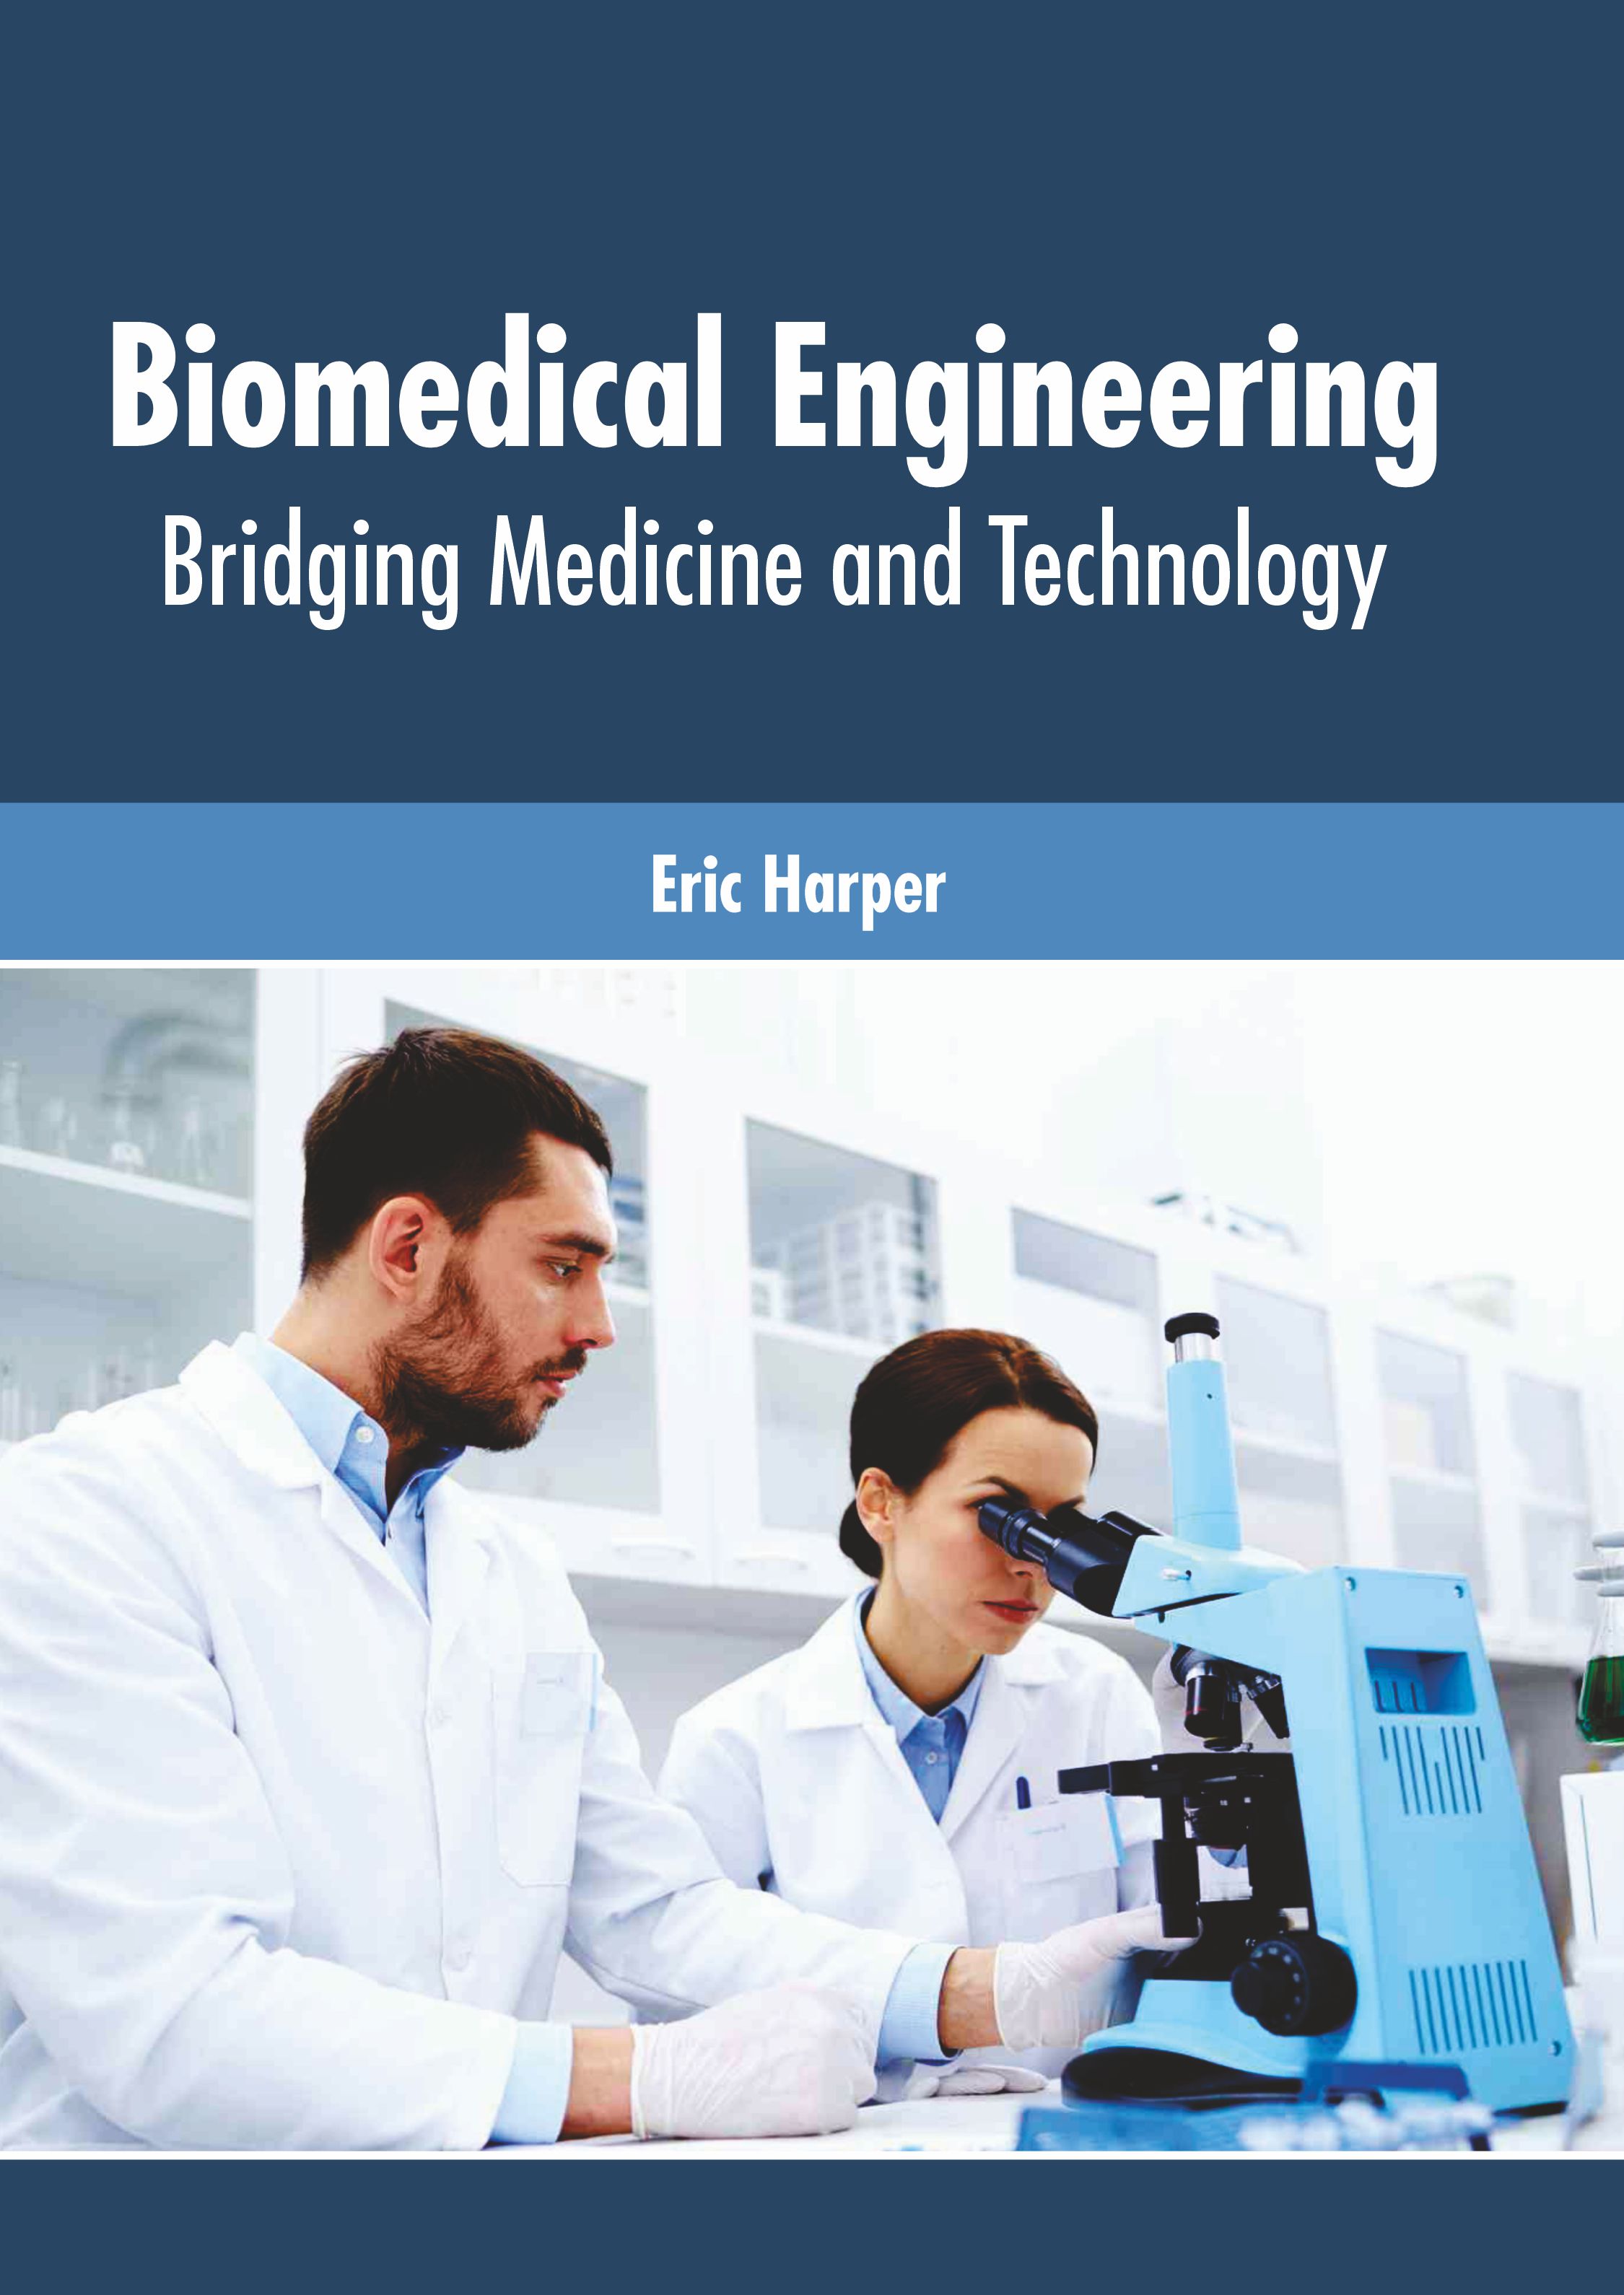 BIOMEDICAL ENGINEERING: BRIDGING MEDICINE AND TECHNOLOGY